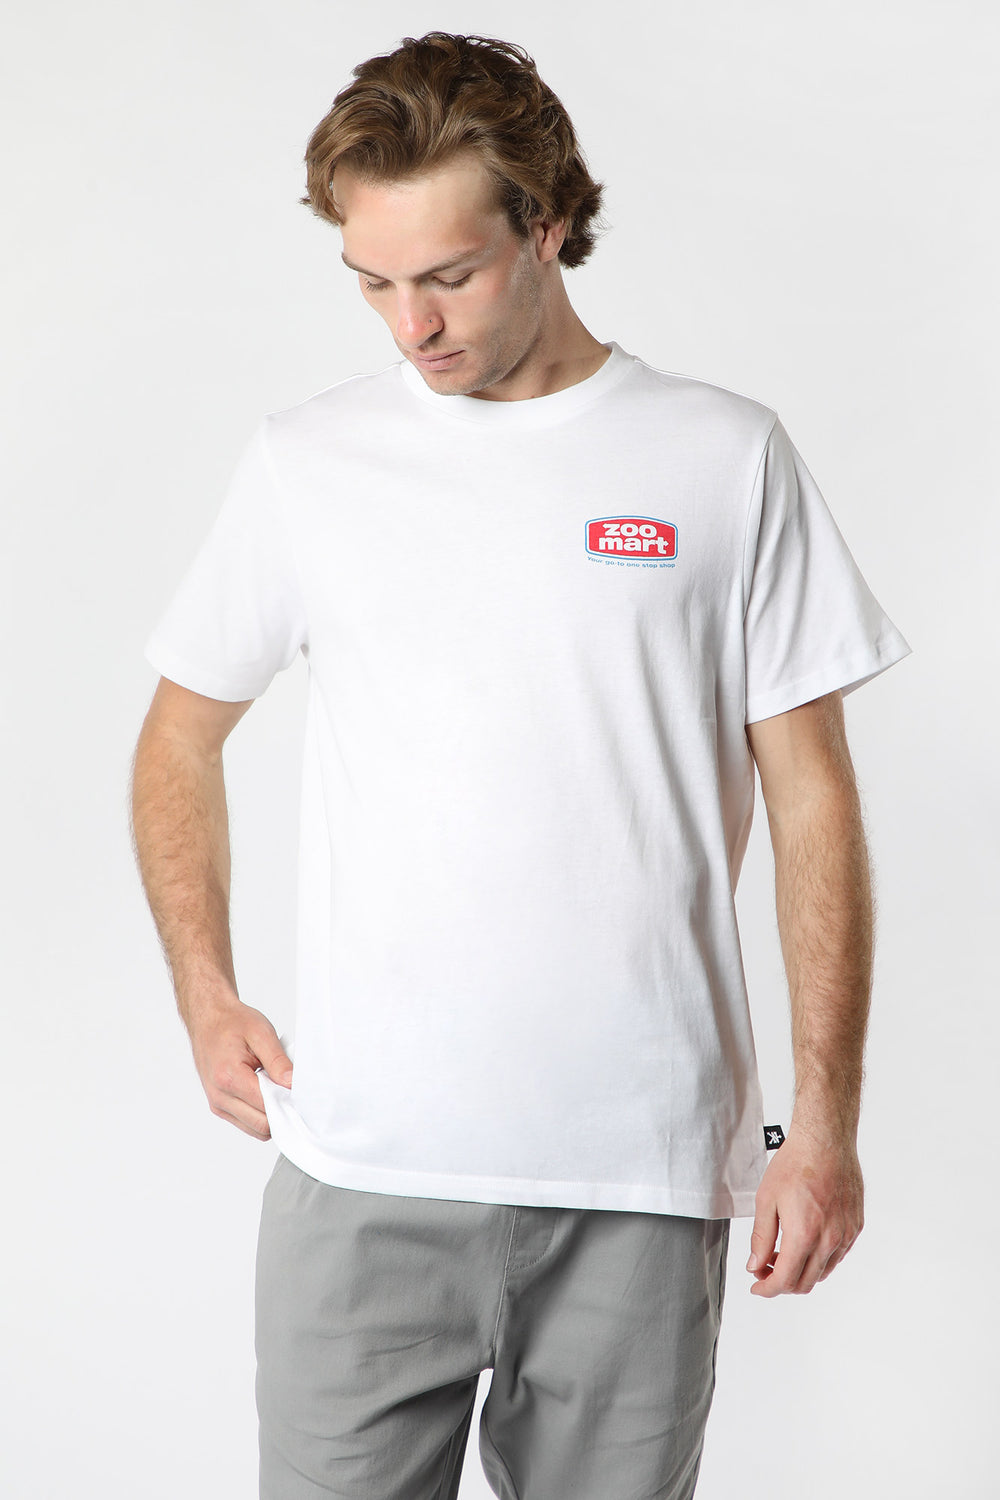 Zoo York Mens Zoomart Items T-Shirt White